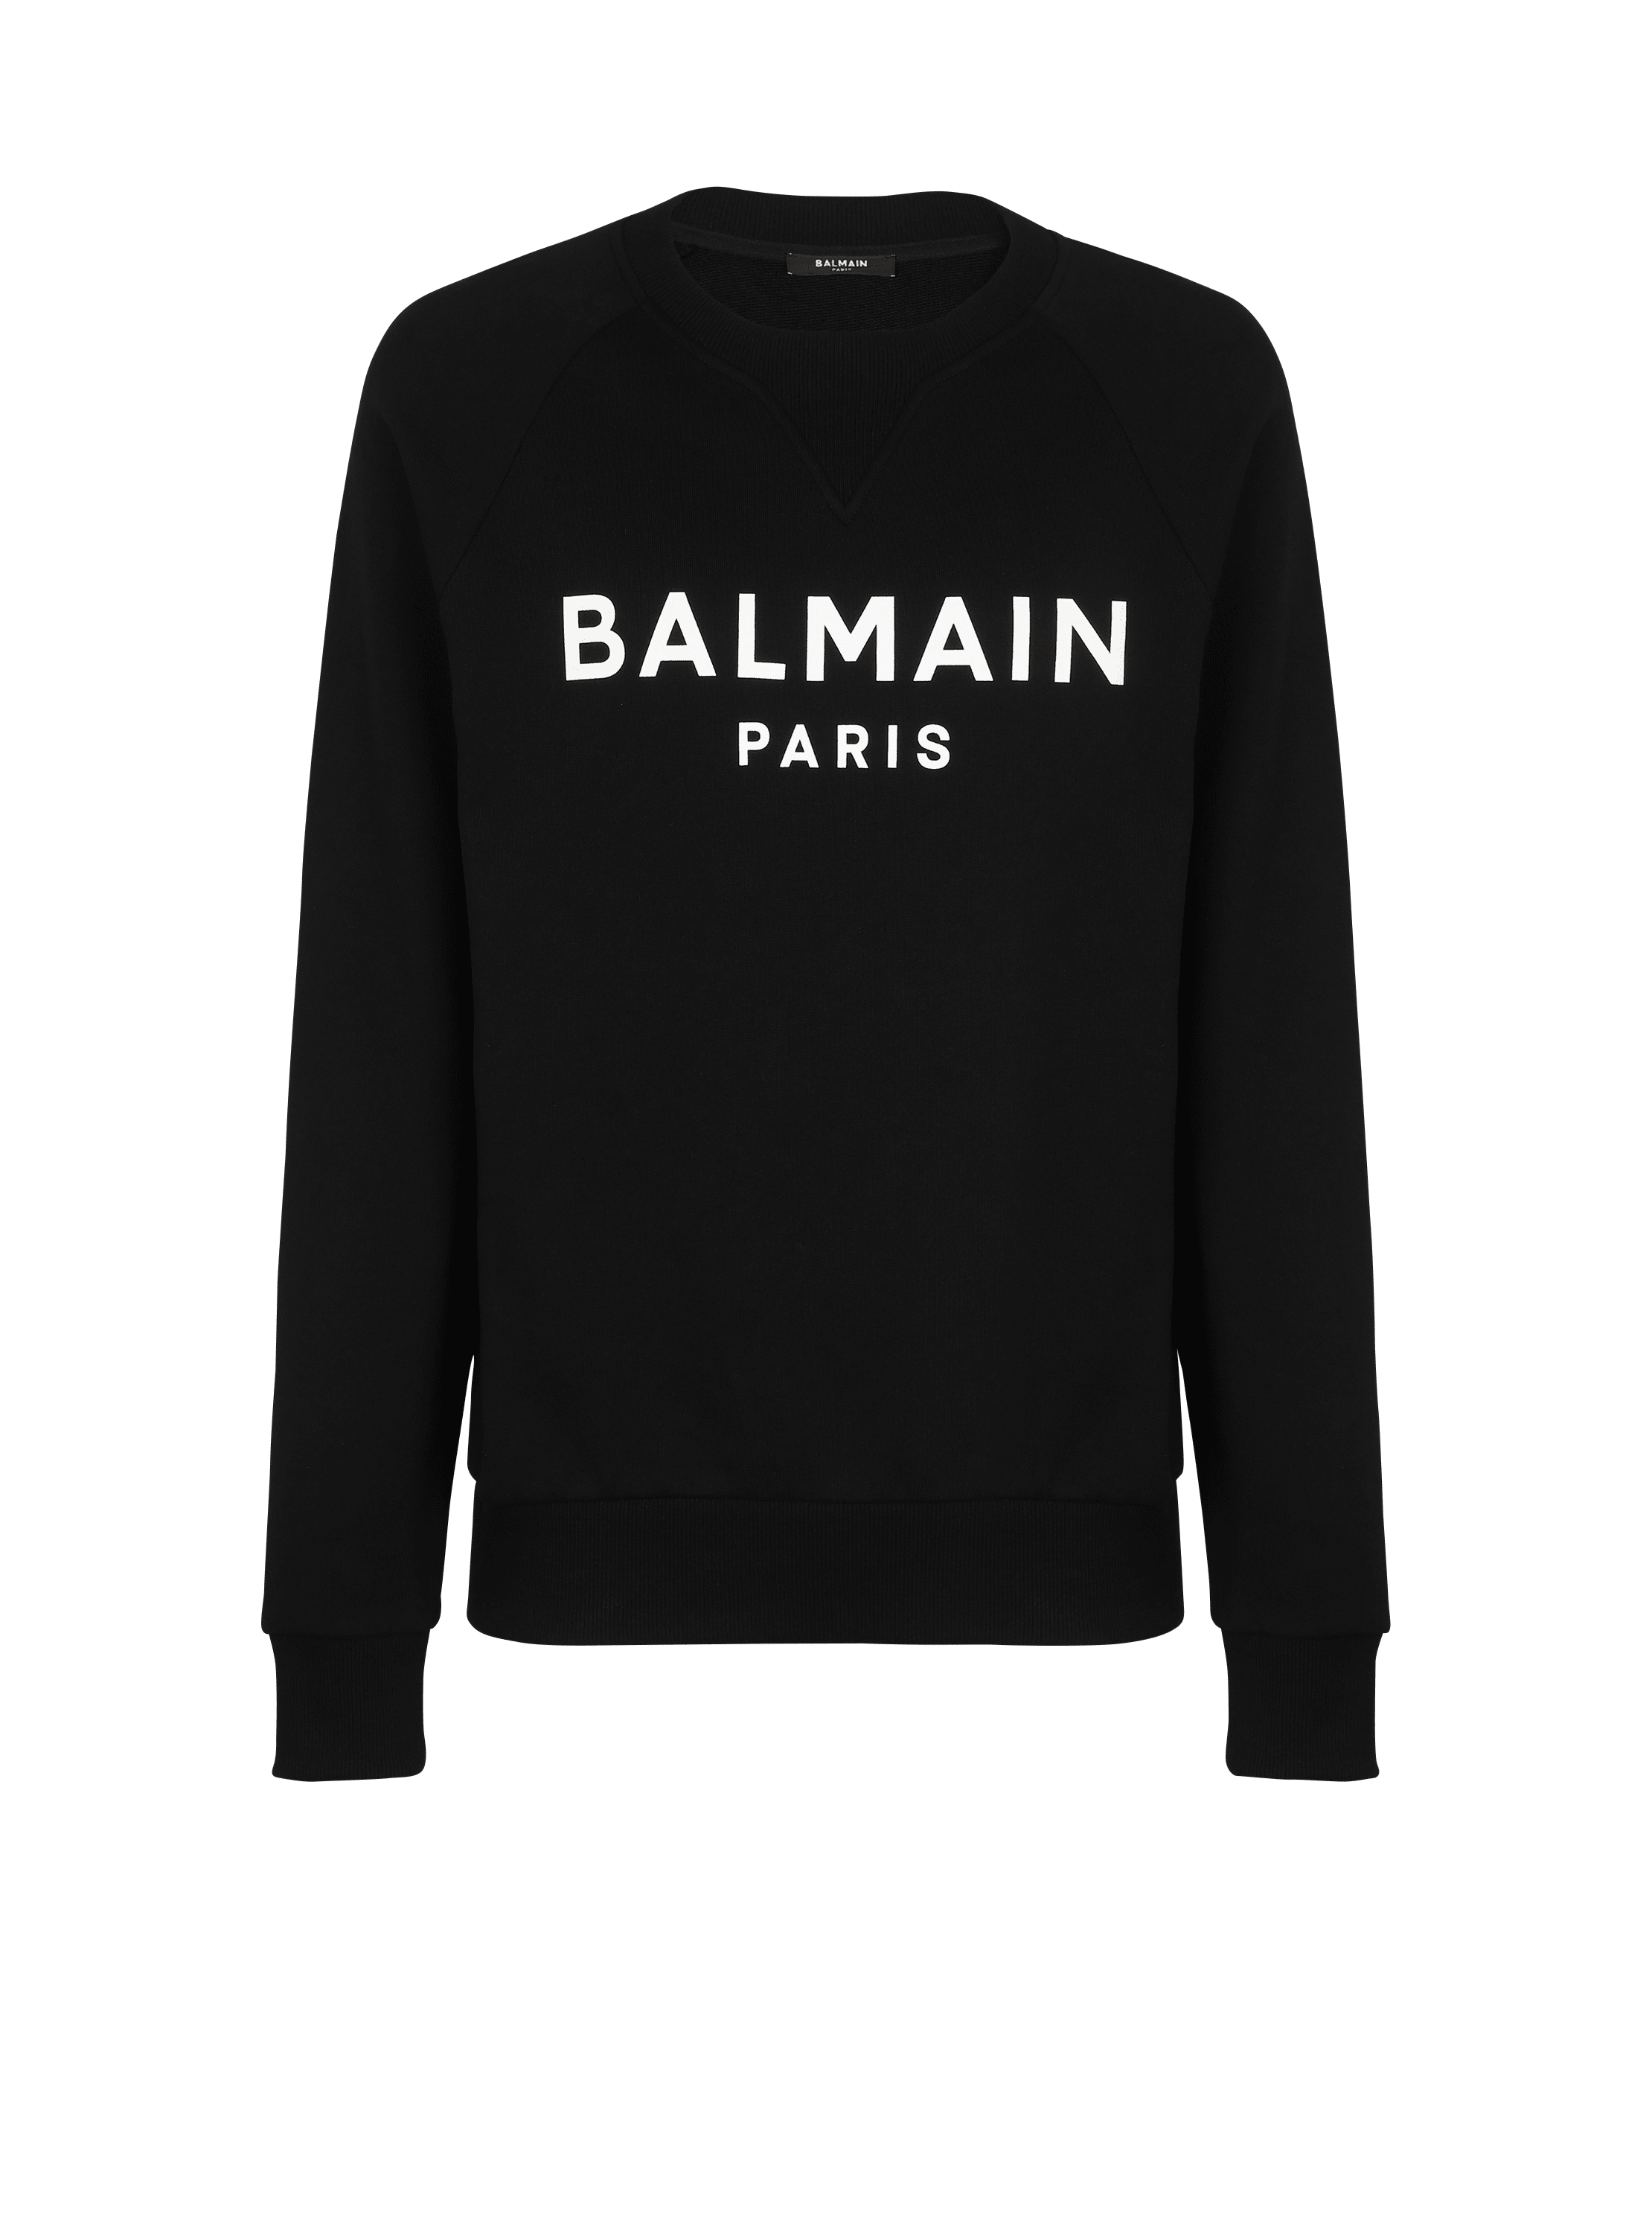 Balmain Paris スウェットシャツ